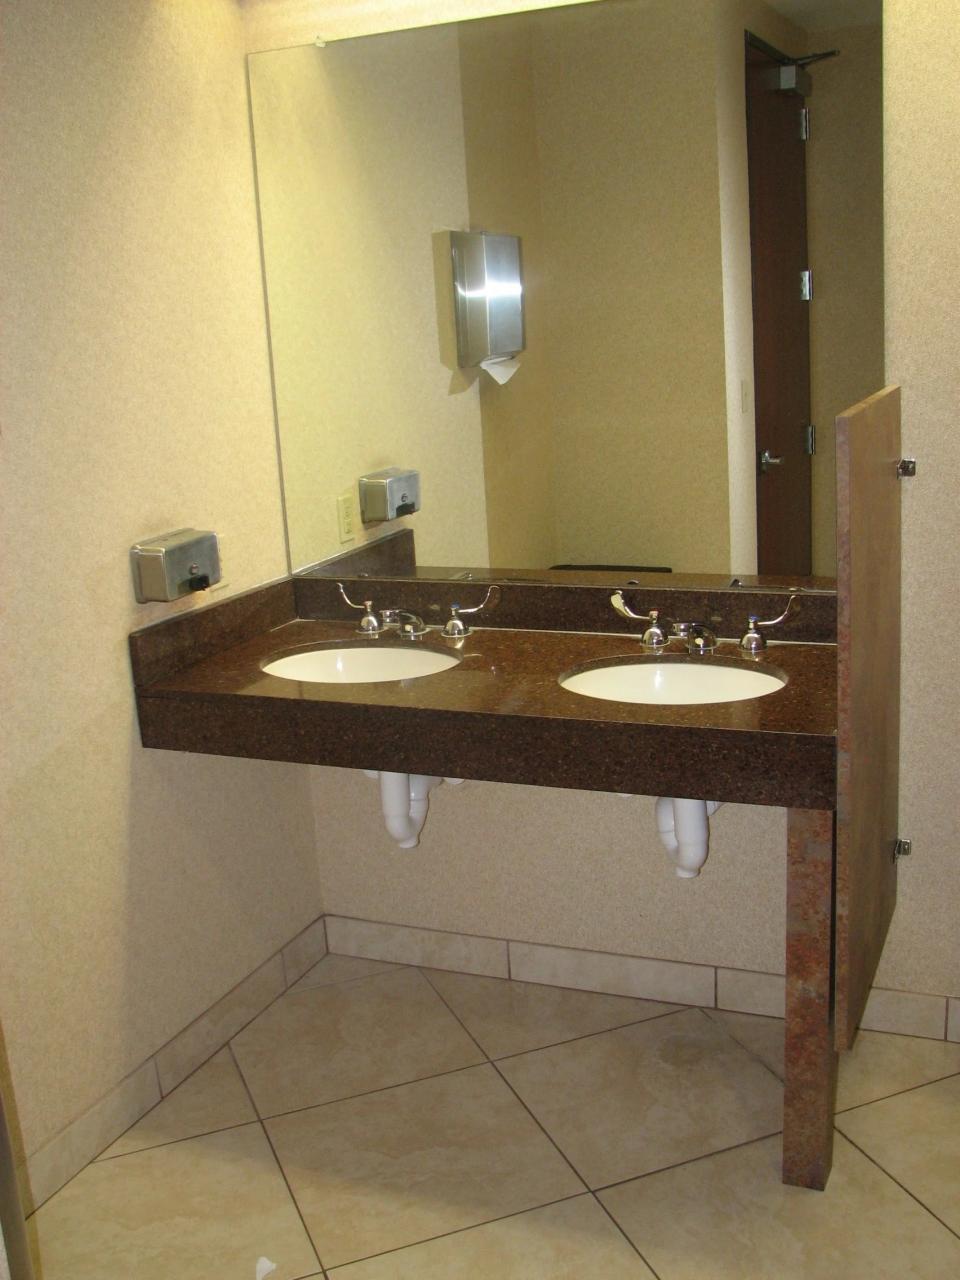 Commercial Bathroom Remodeling In Austin